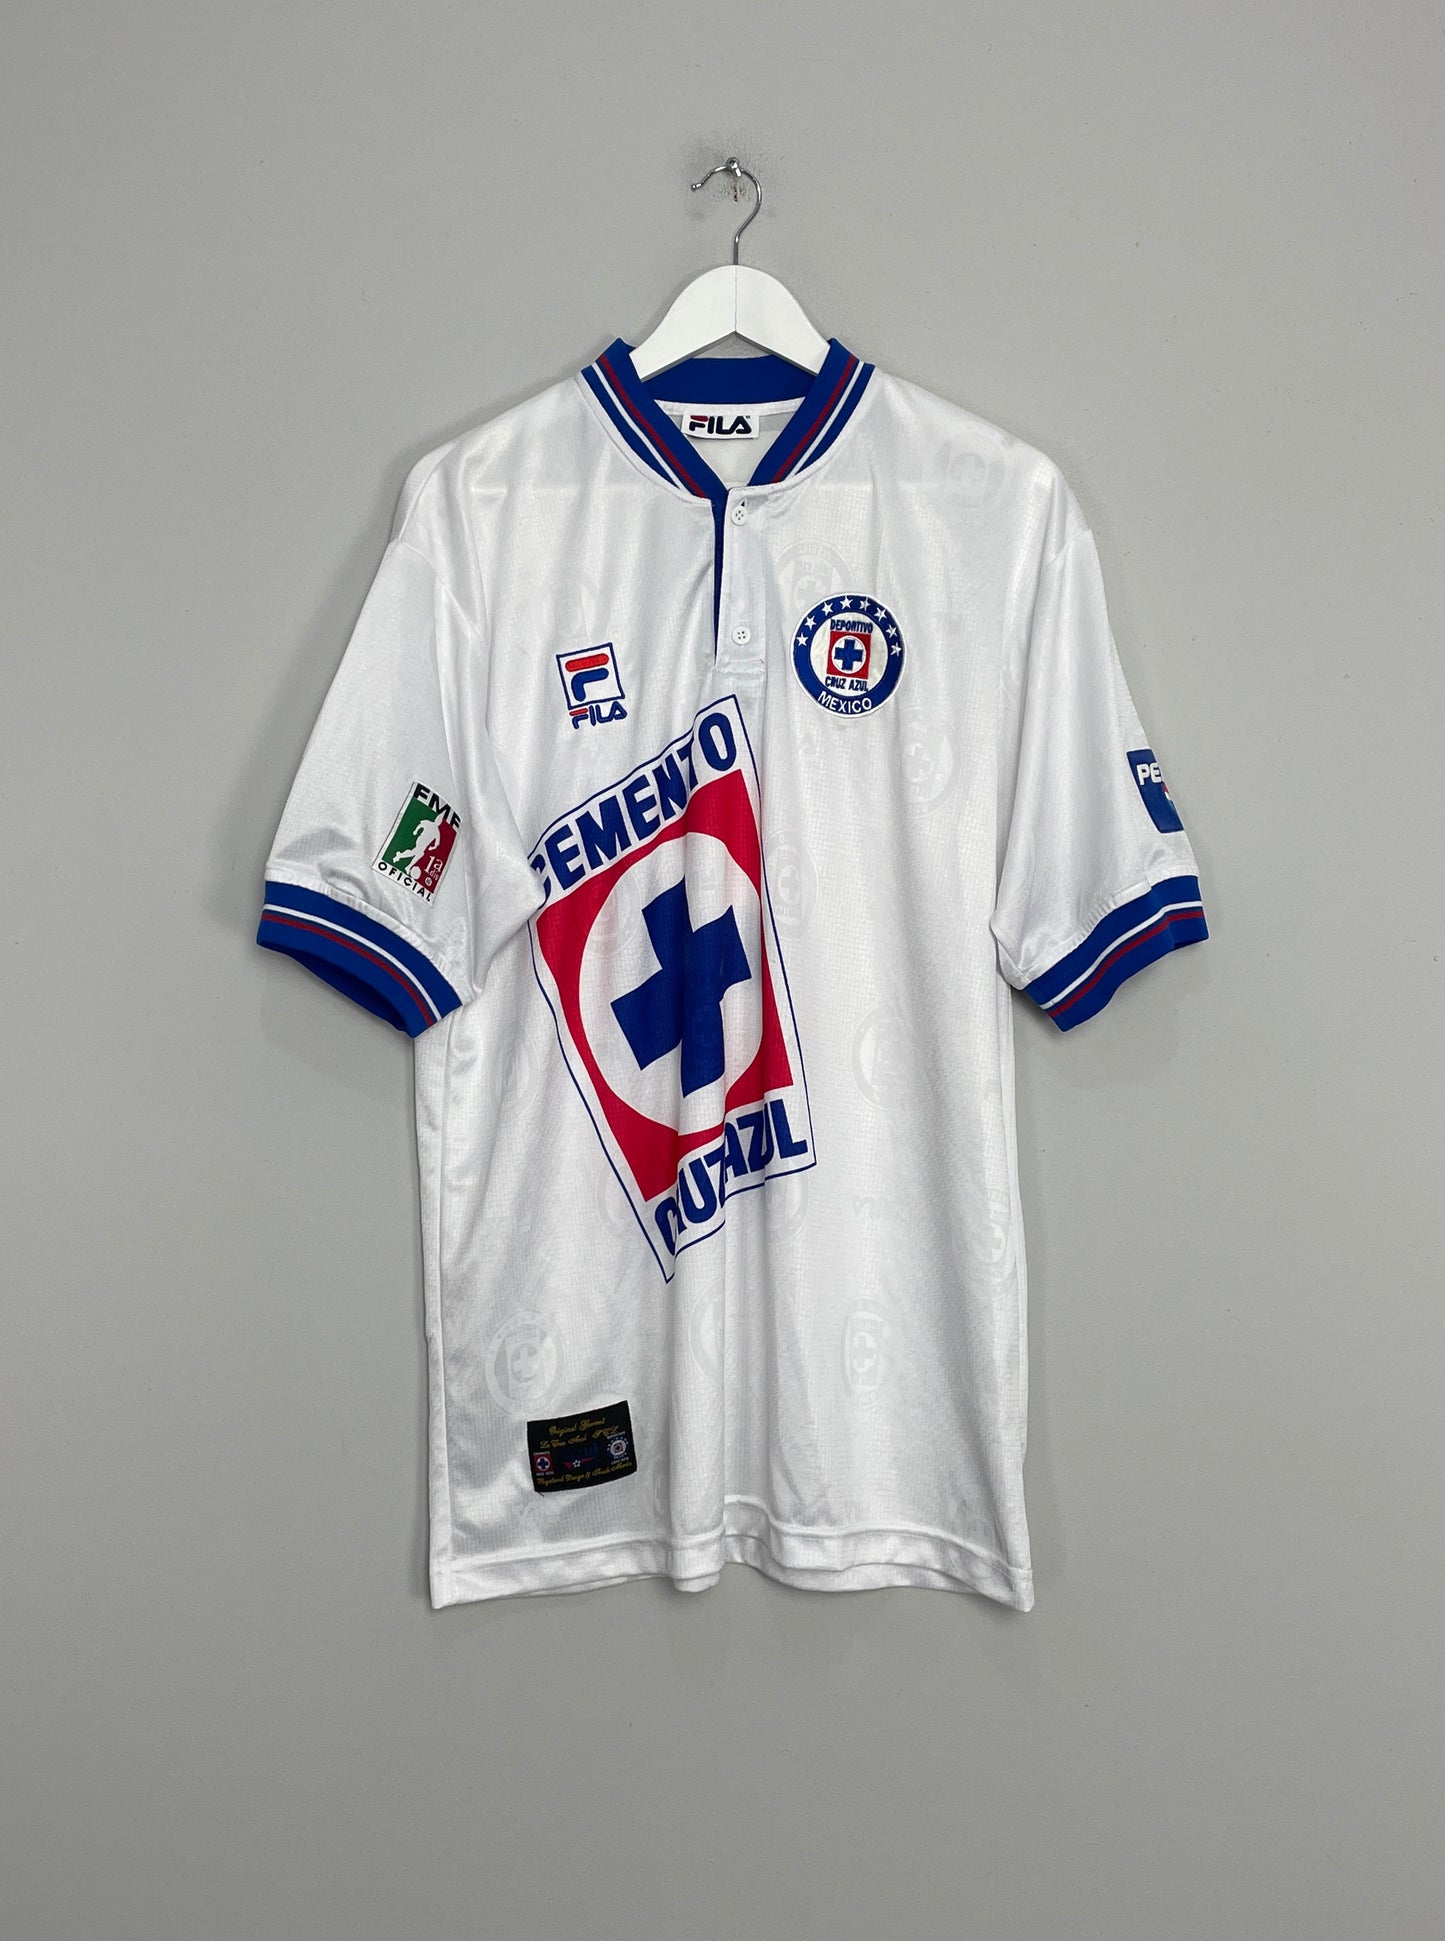 Image of the Cruz Azul shirt from the 1999/00 season